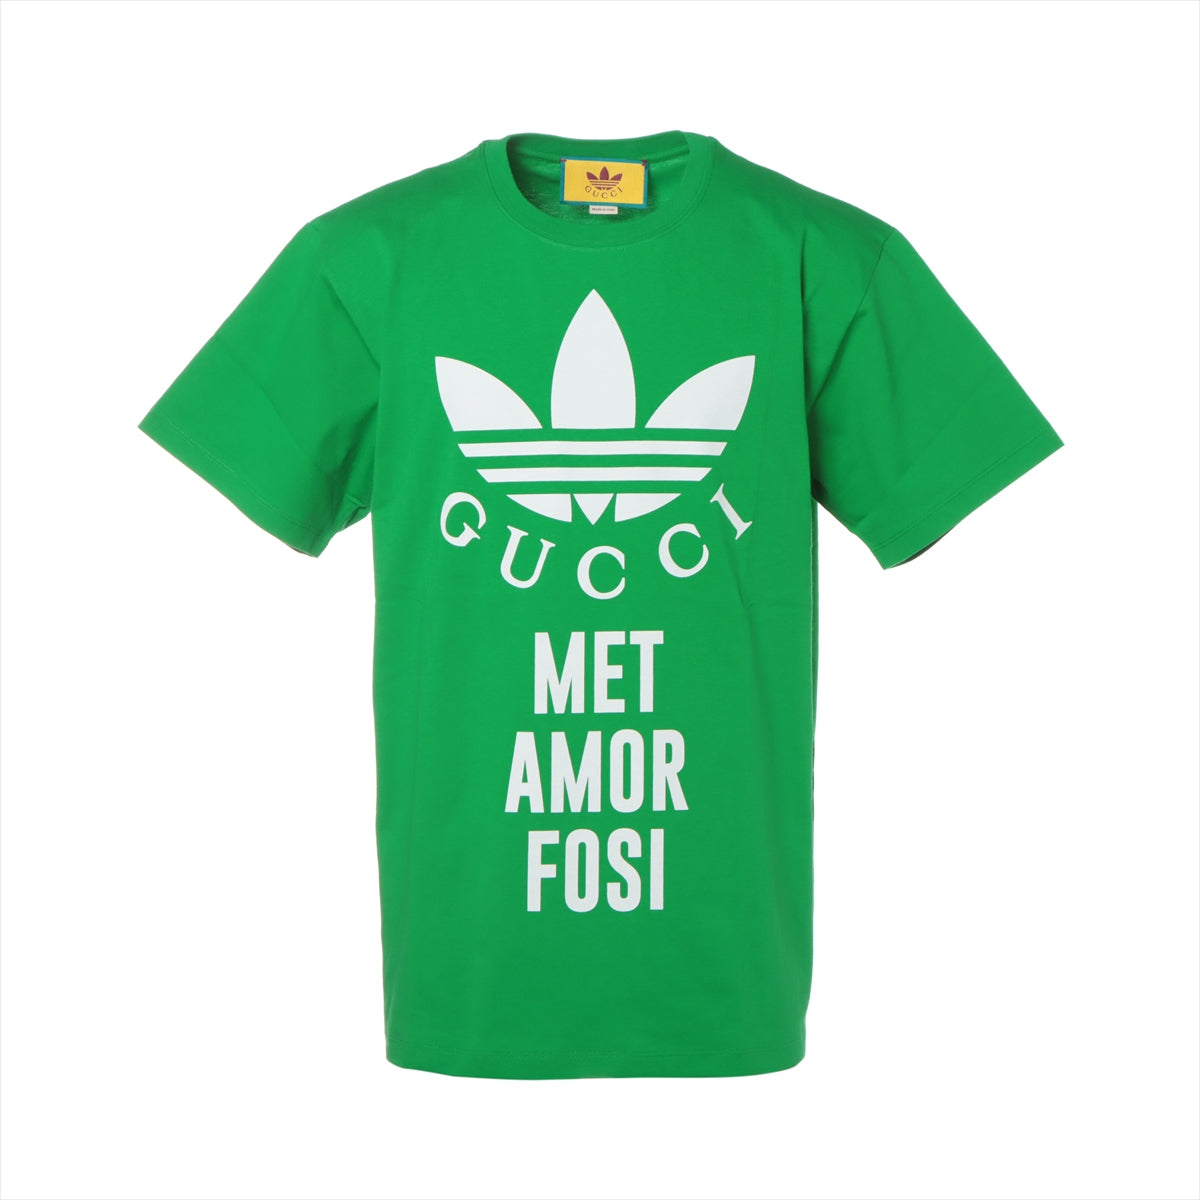 Gucci x Adidas Cotton  S  Green 717422